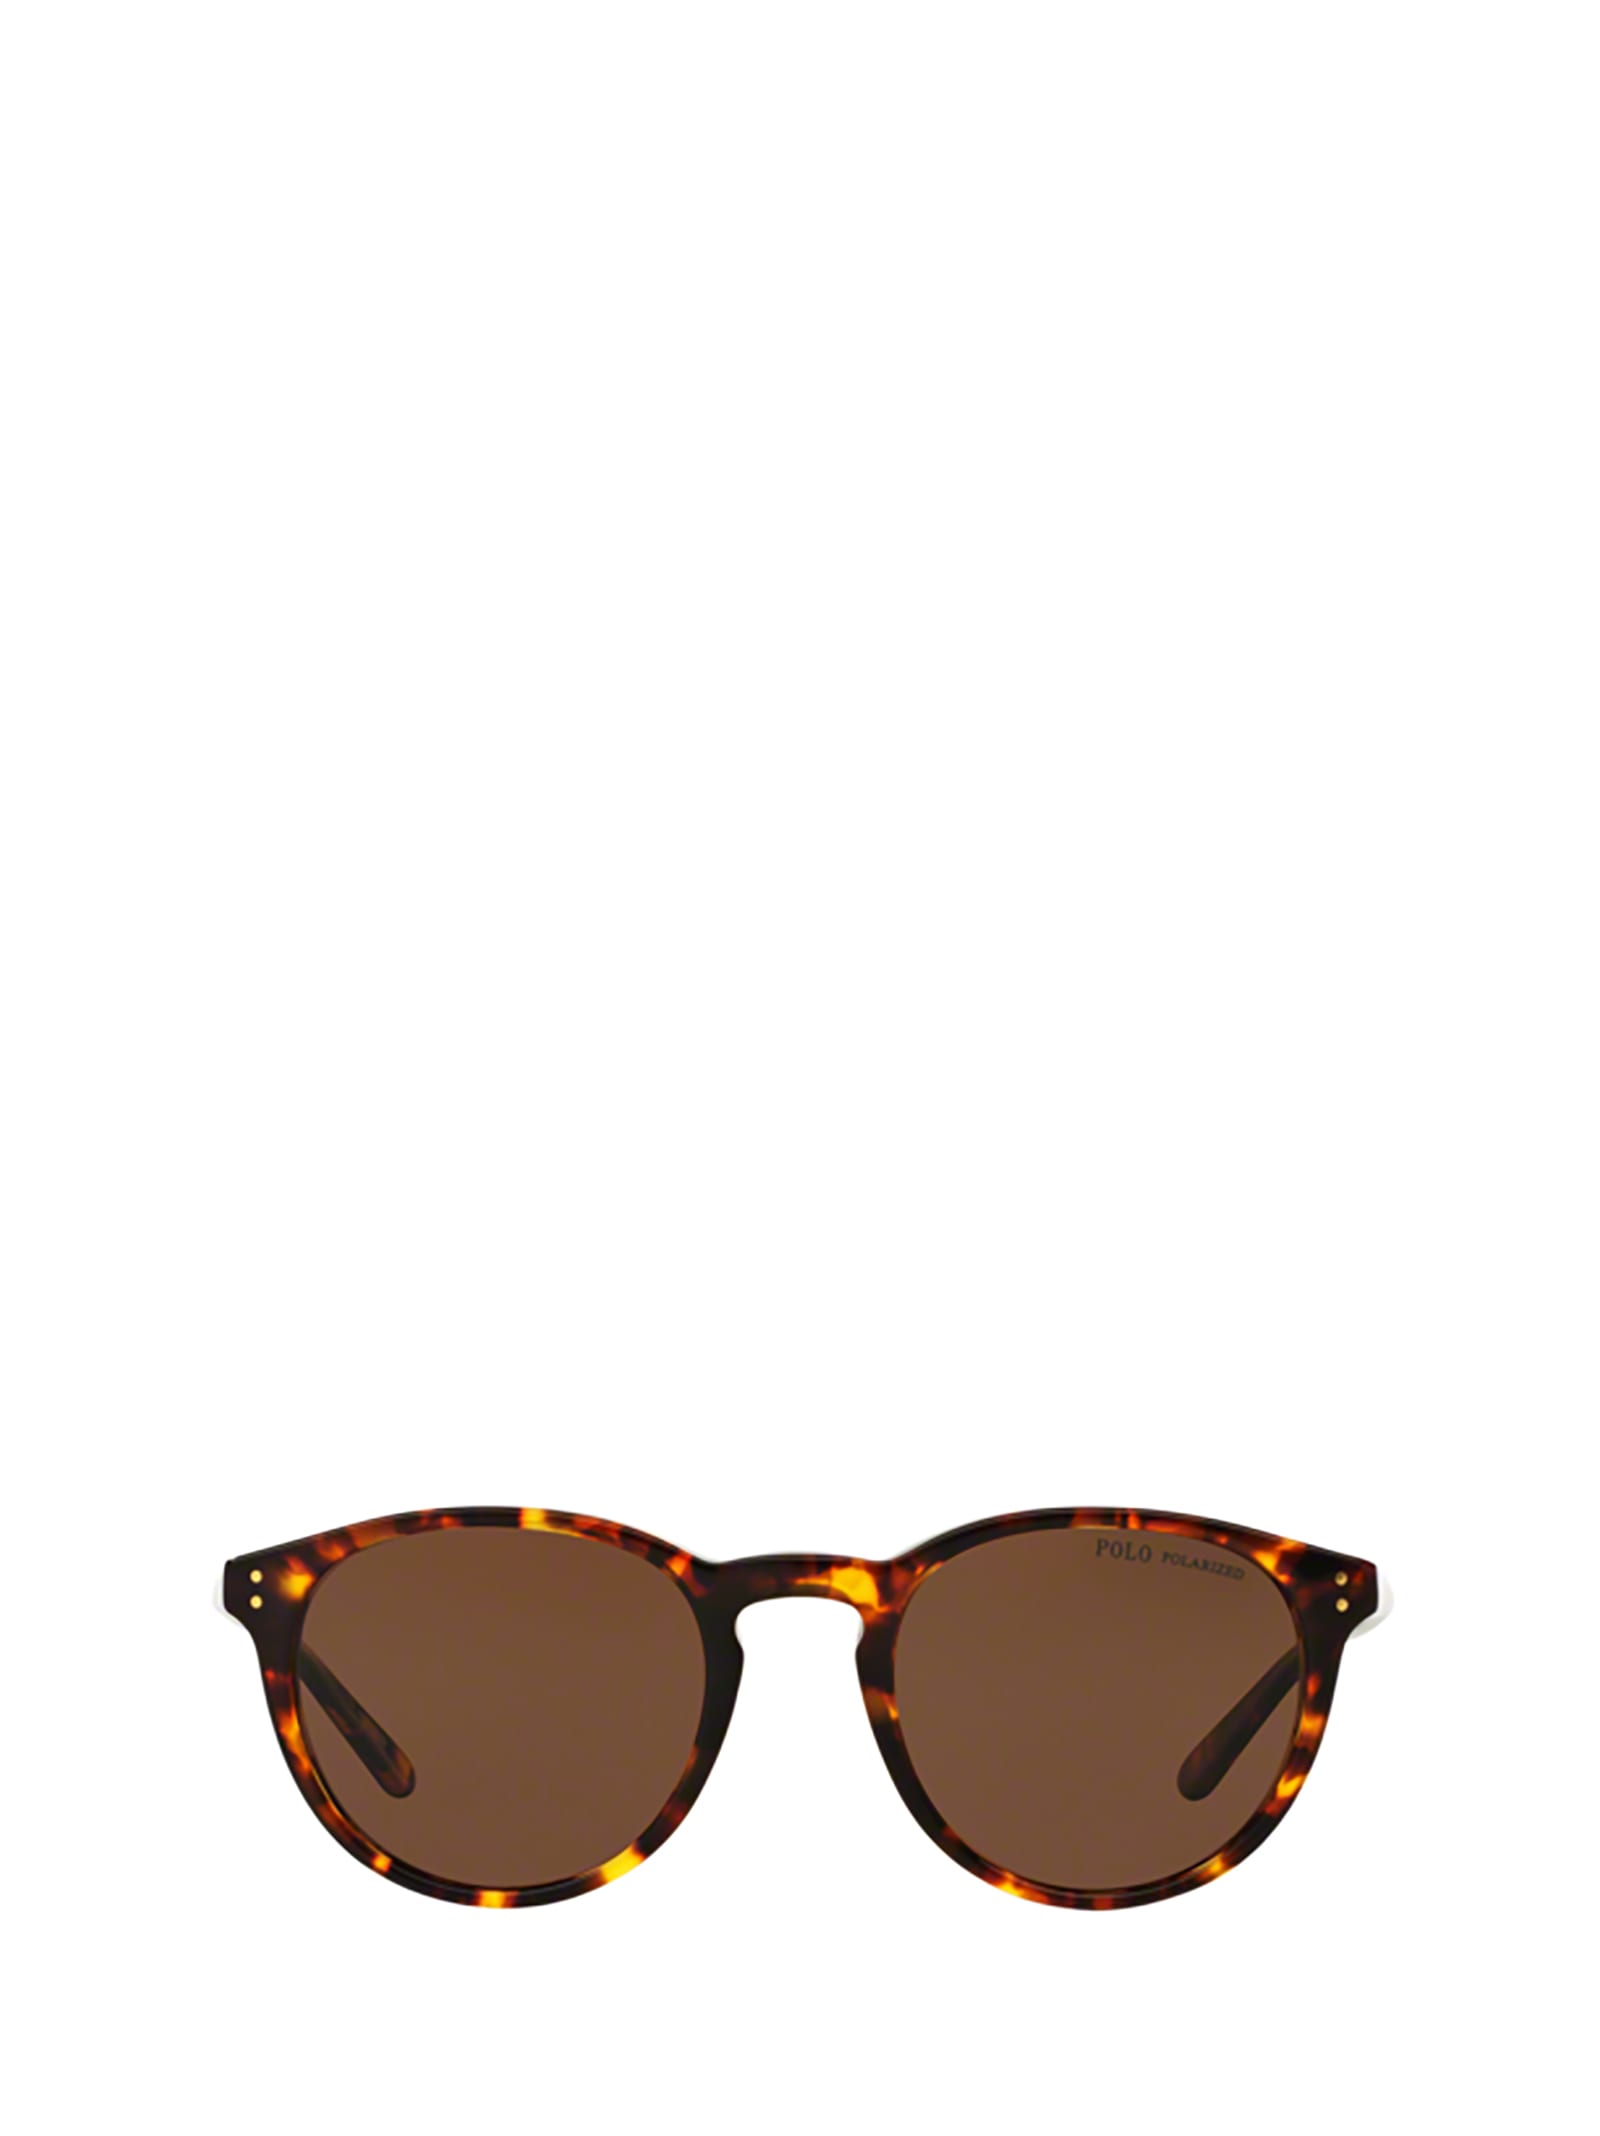 Polo Ralph Lauren Ph4110 513473 Sunglasses